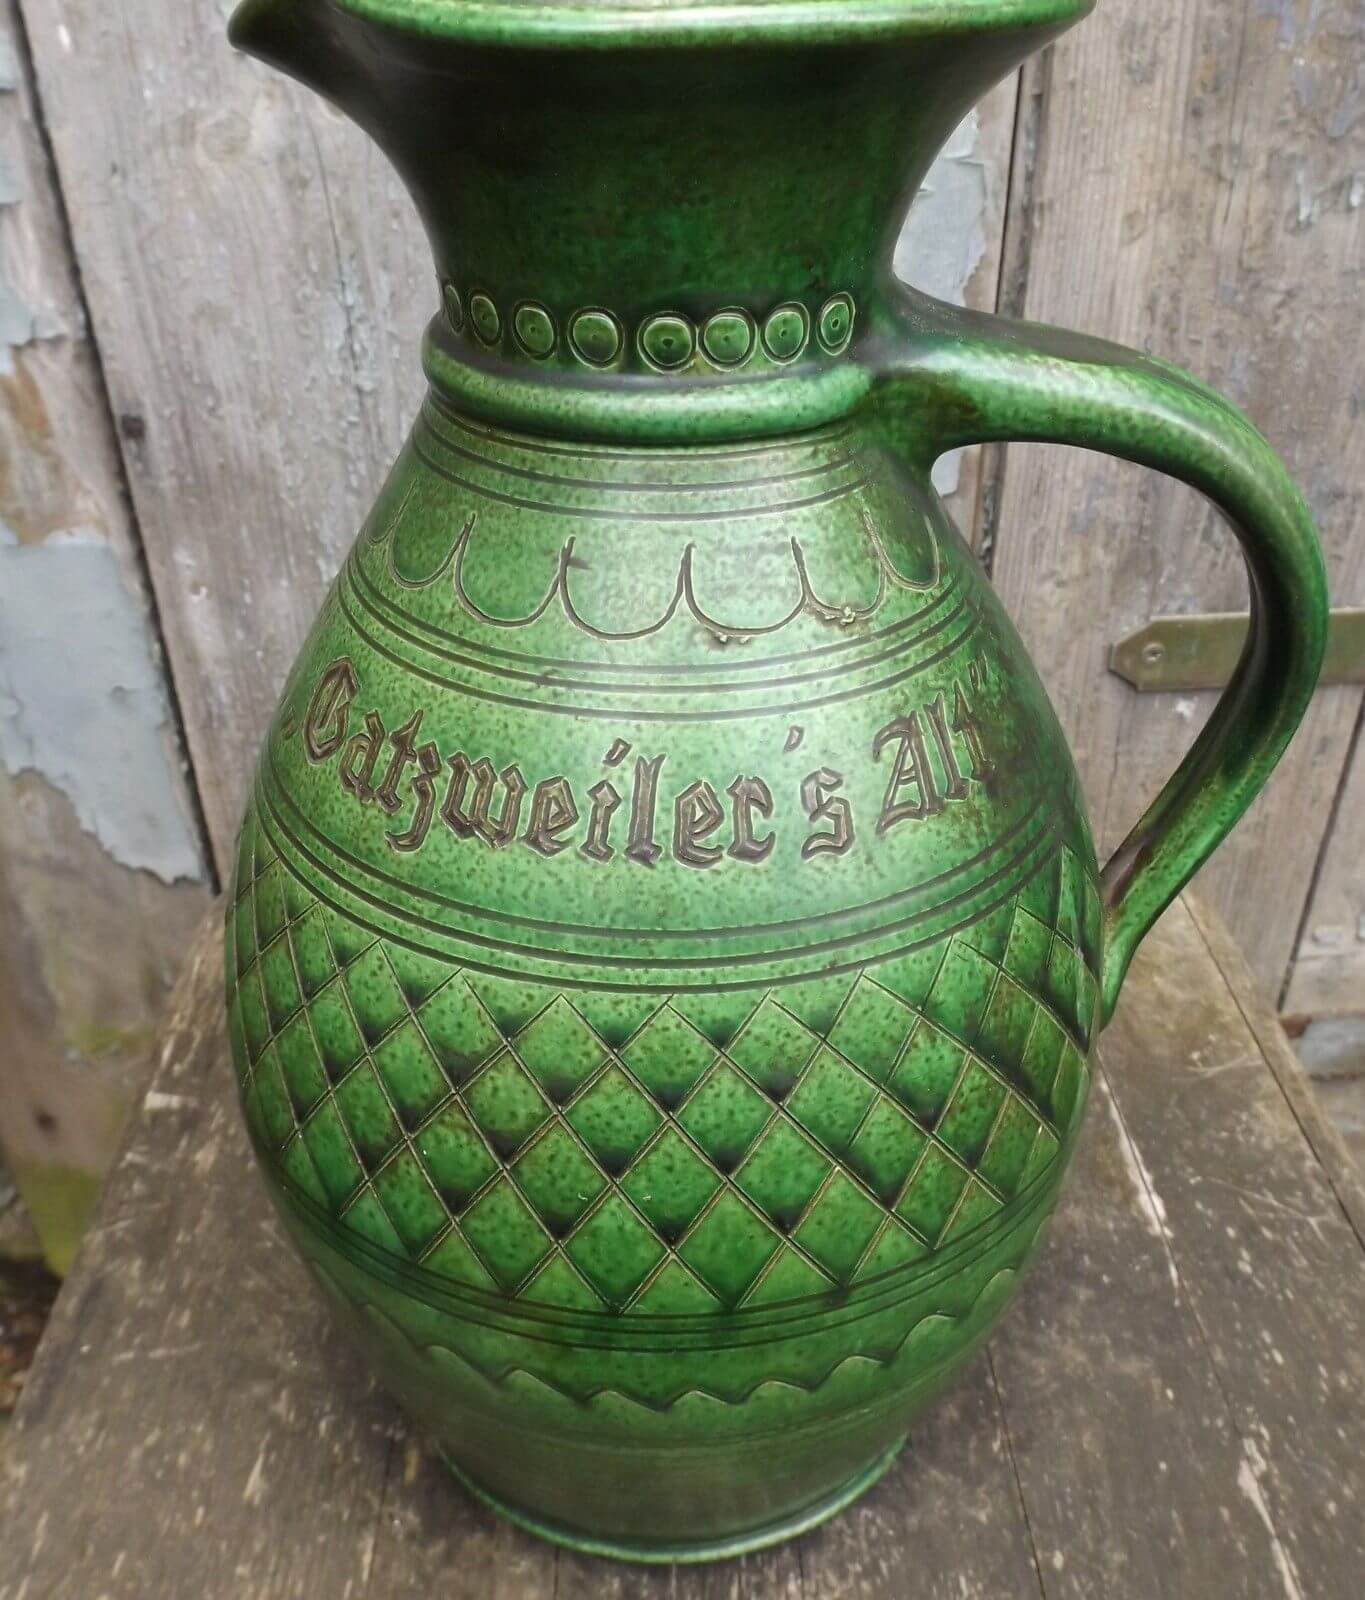 Desireable German arts and crafts antique Pitcher Pottery Vase Krug